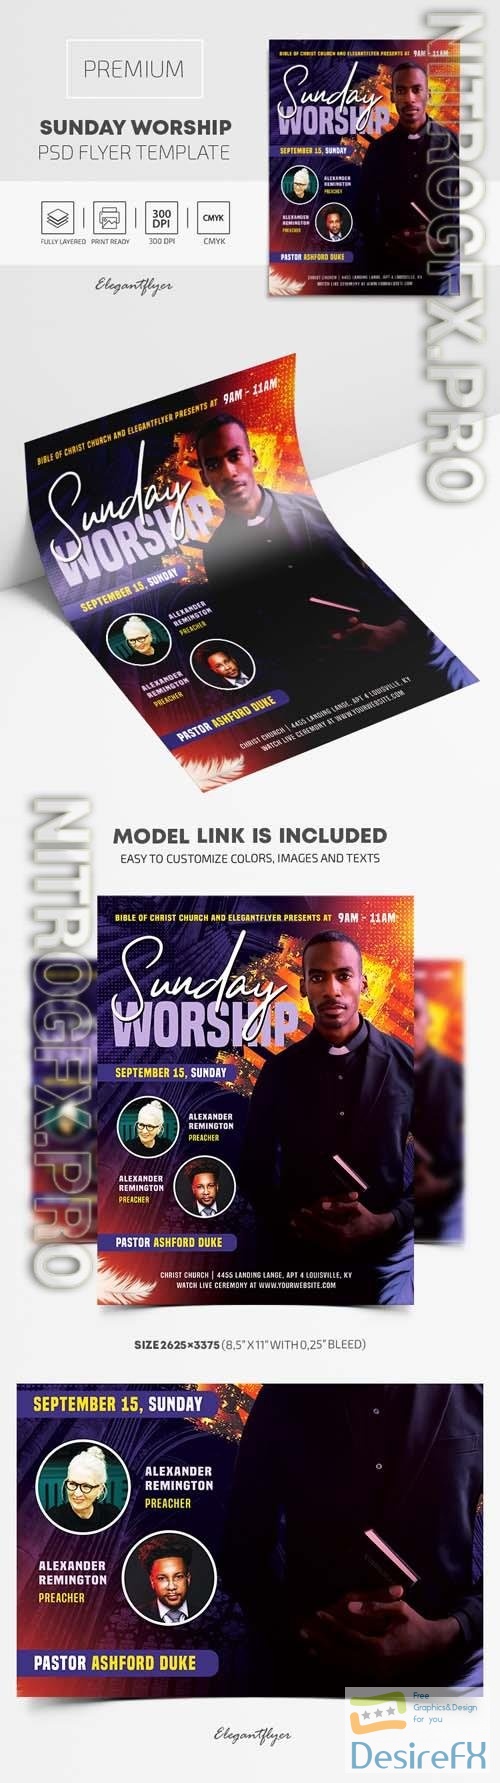 Sunday Worship Premium PSD Flyer Template